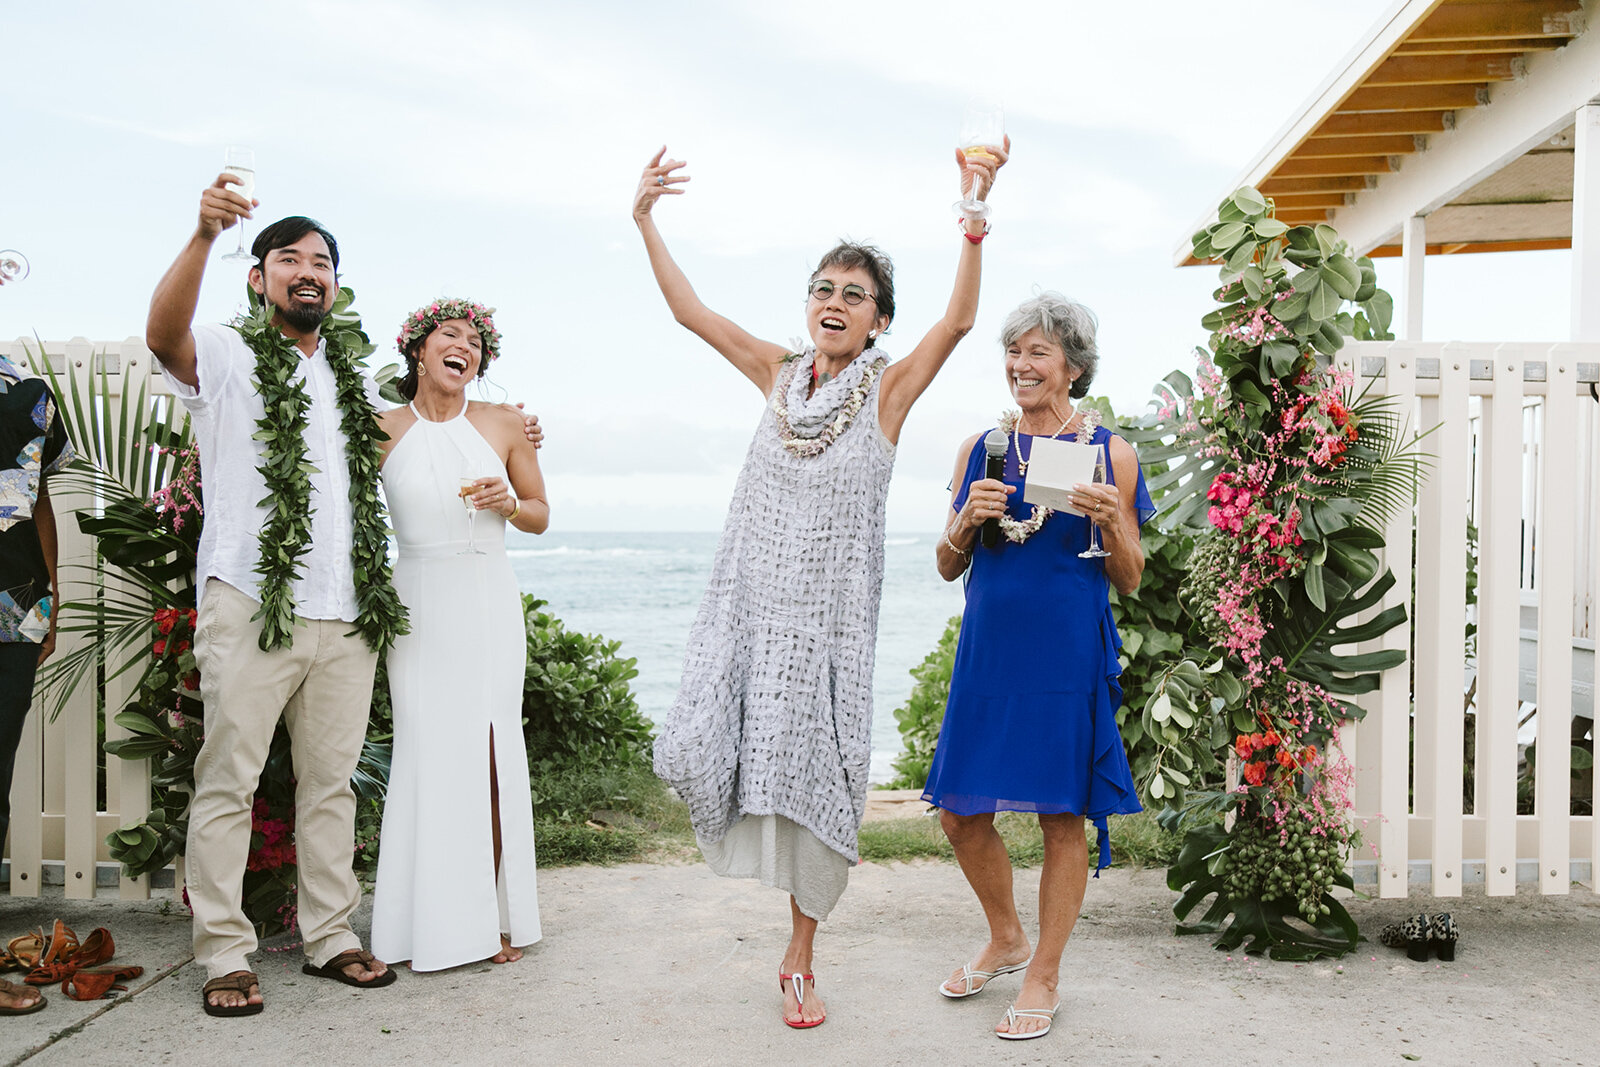 Mokuleia-North-Shore-Hawaii-Beach-House-Wedding-ceremony-champagne-toast